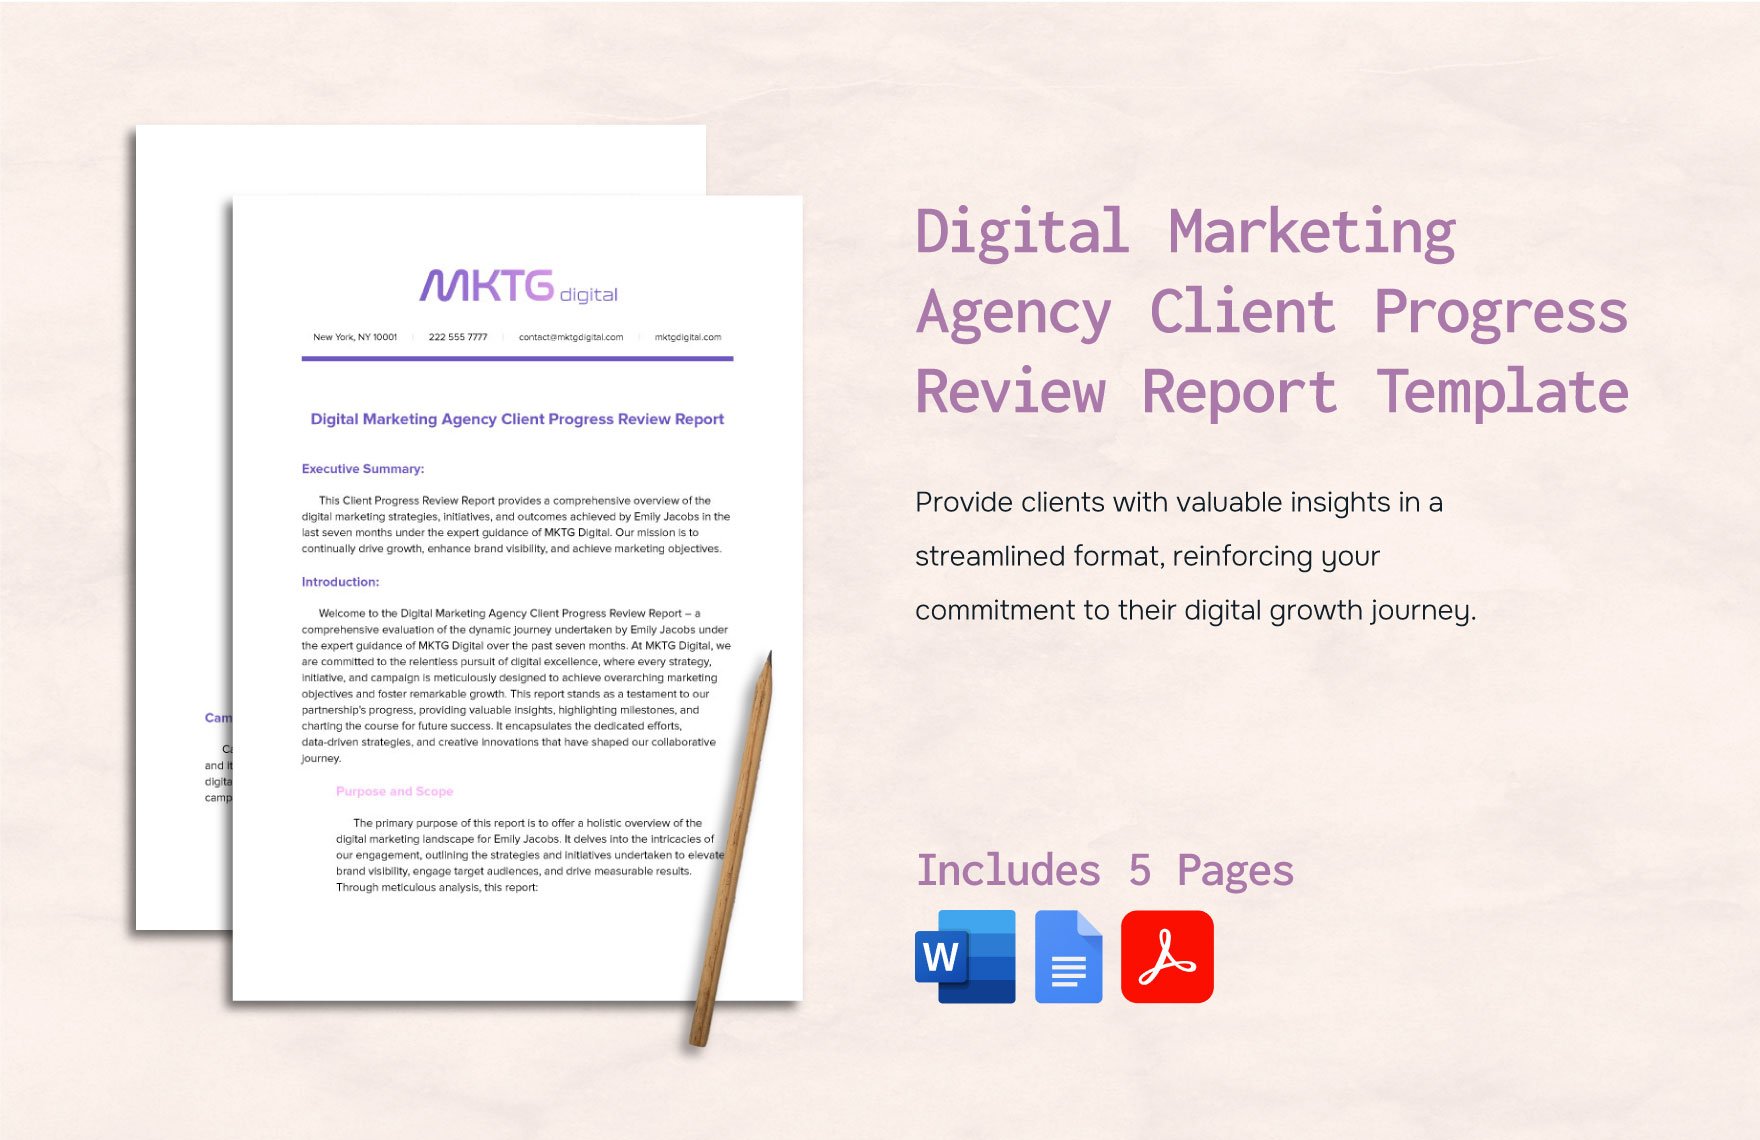 Digital Marketing Agency Client Progress Review Report Template